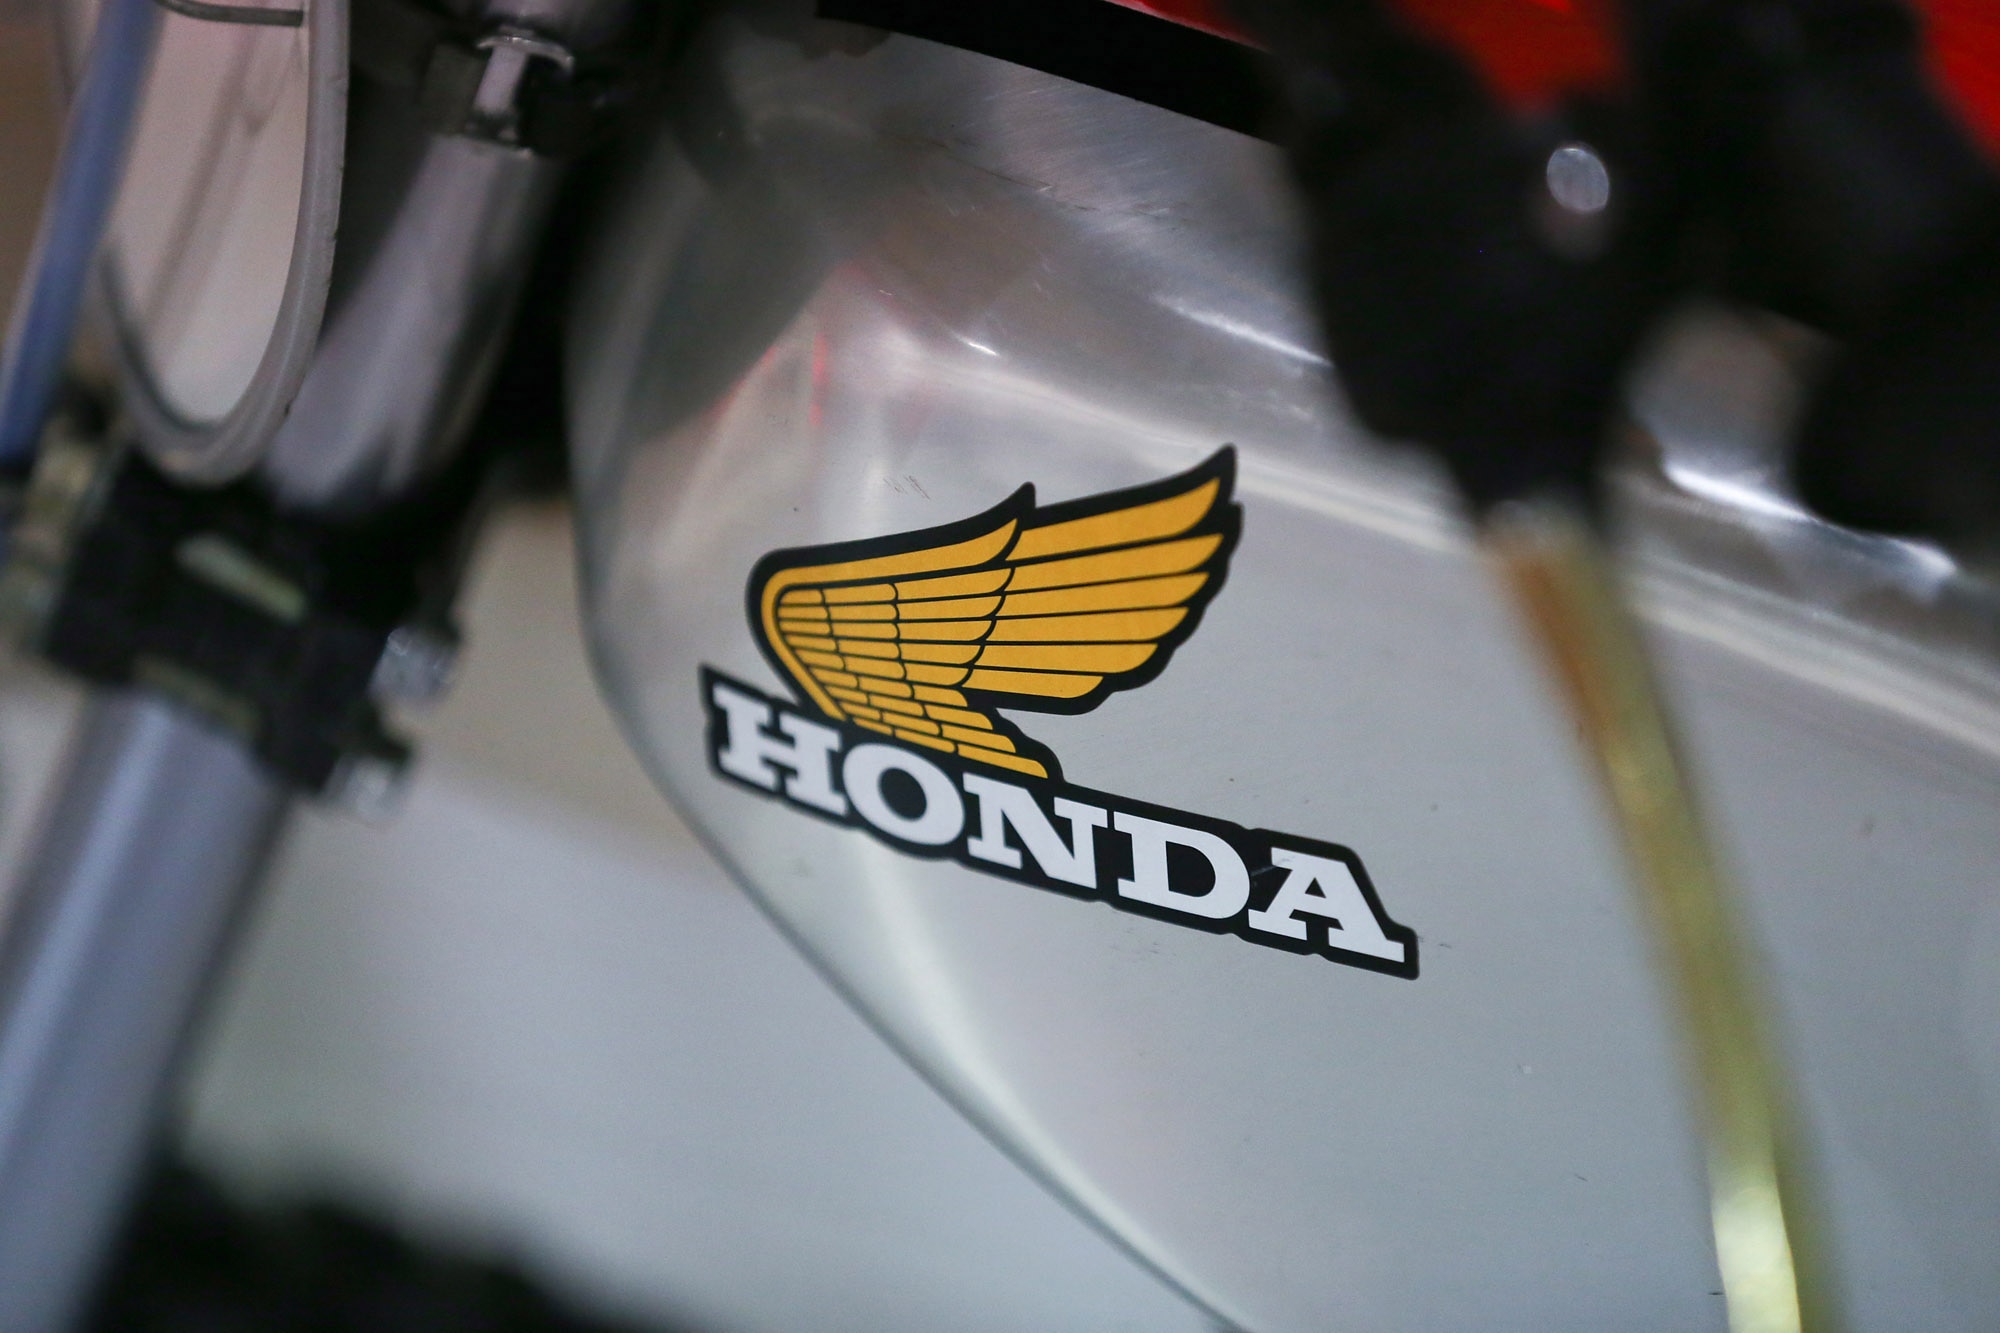 Honda logo with wings on motorcycle tank